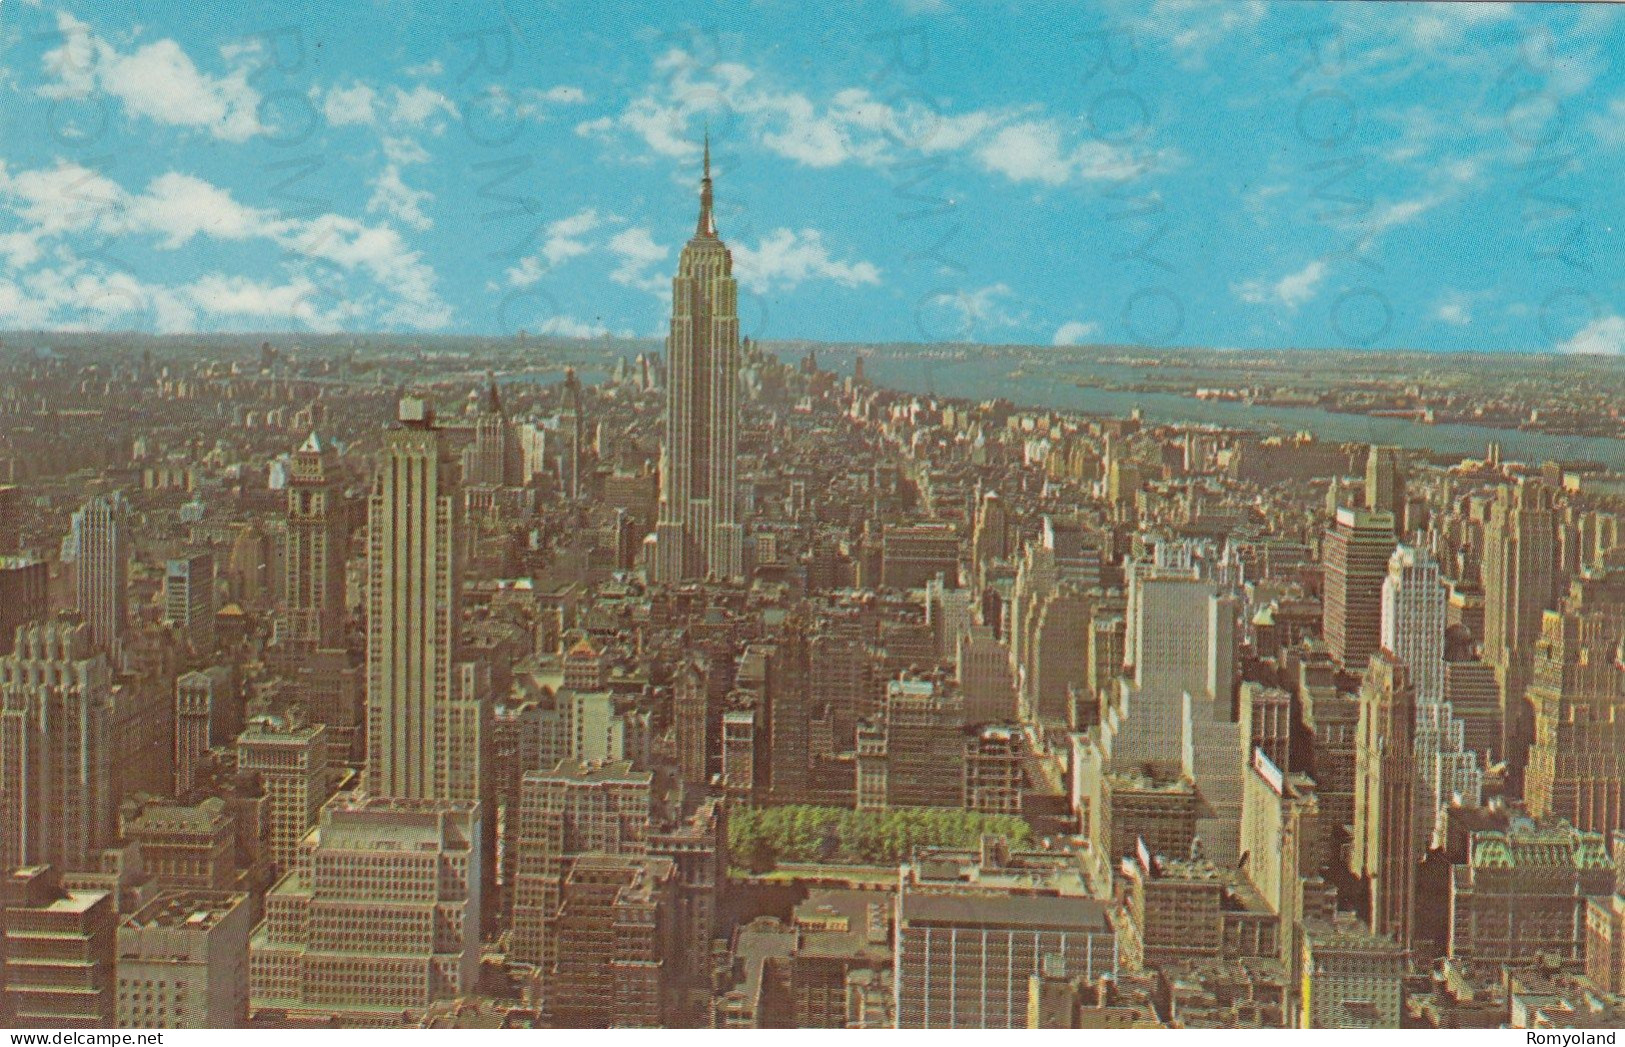 CARTOLINA  NEW YORK CITY,NEW YORK,STATI UNITI-THE EMPIRE STATE BUILDING RISES MAIESTICALY ABOVE THIS PANOR-NON VIAGGIATA - Empire State Building